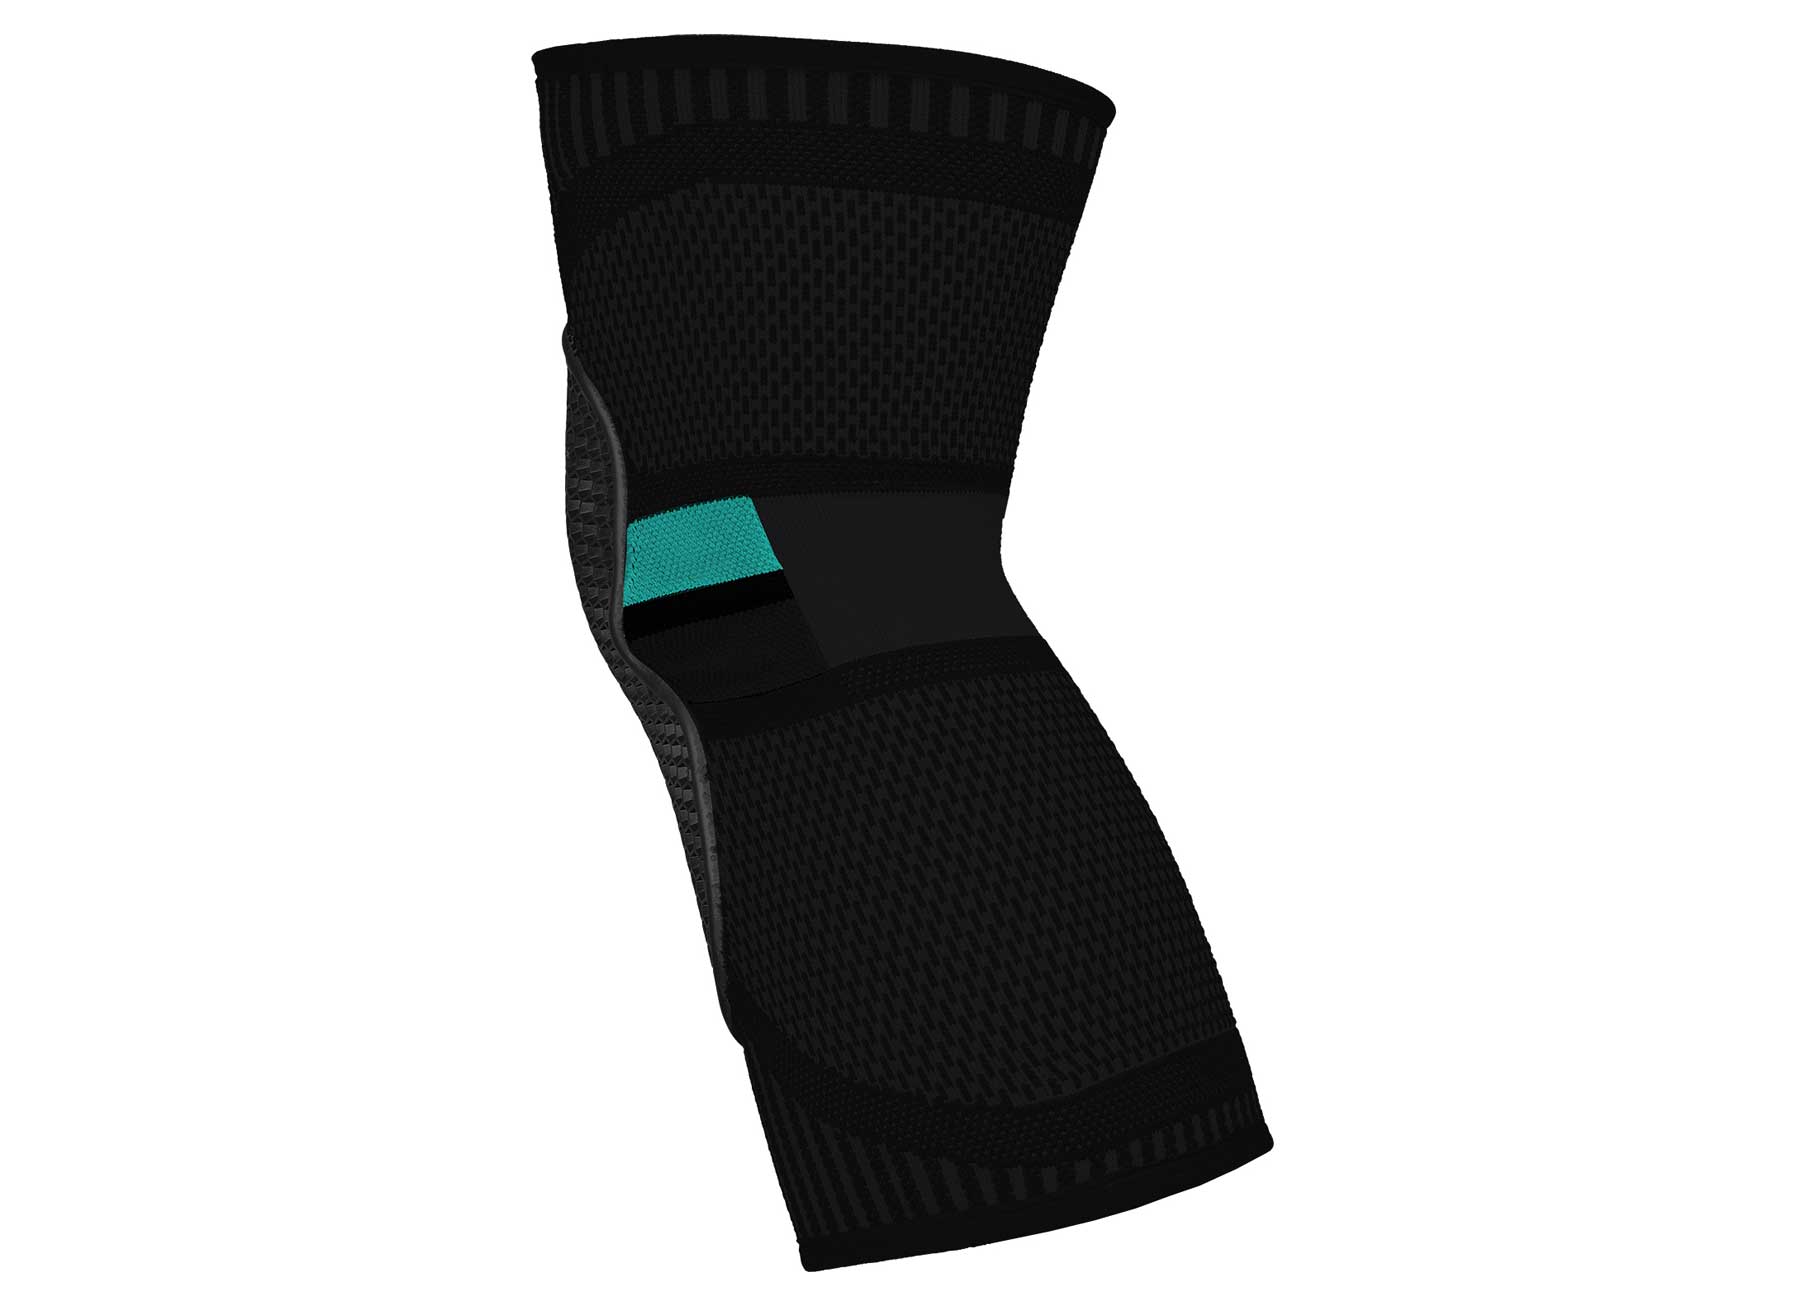 Amplifi MKX knee protection black / turquoise